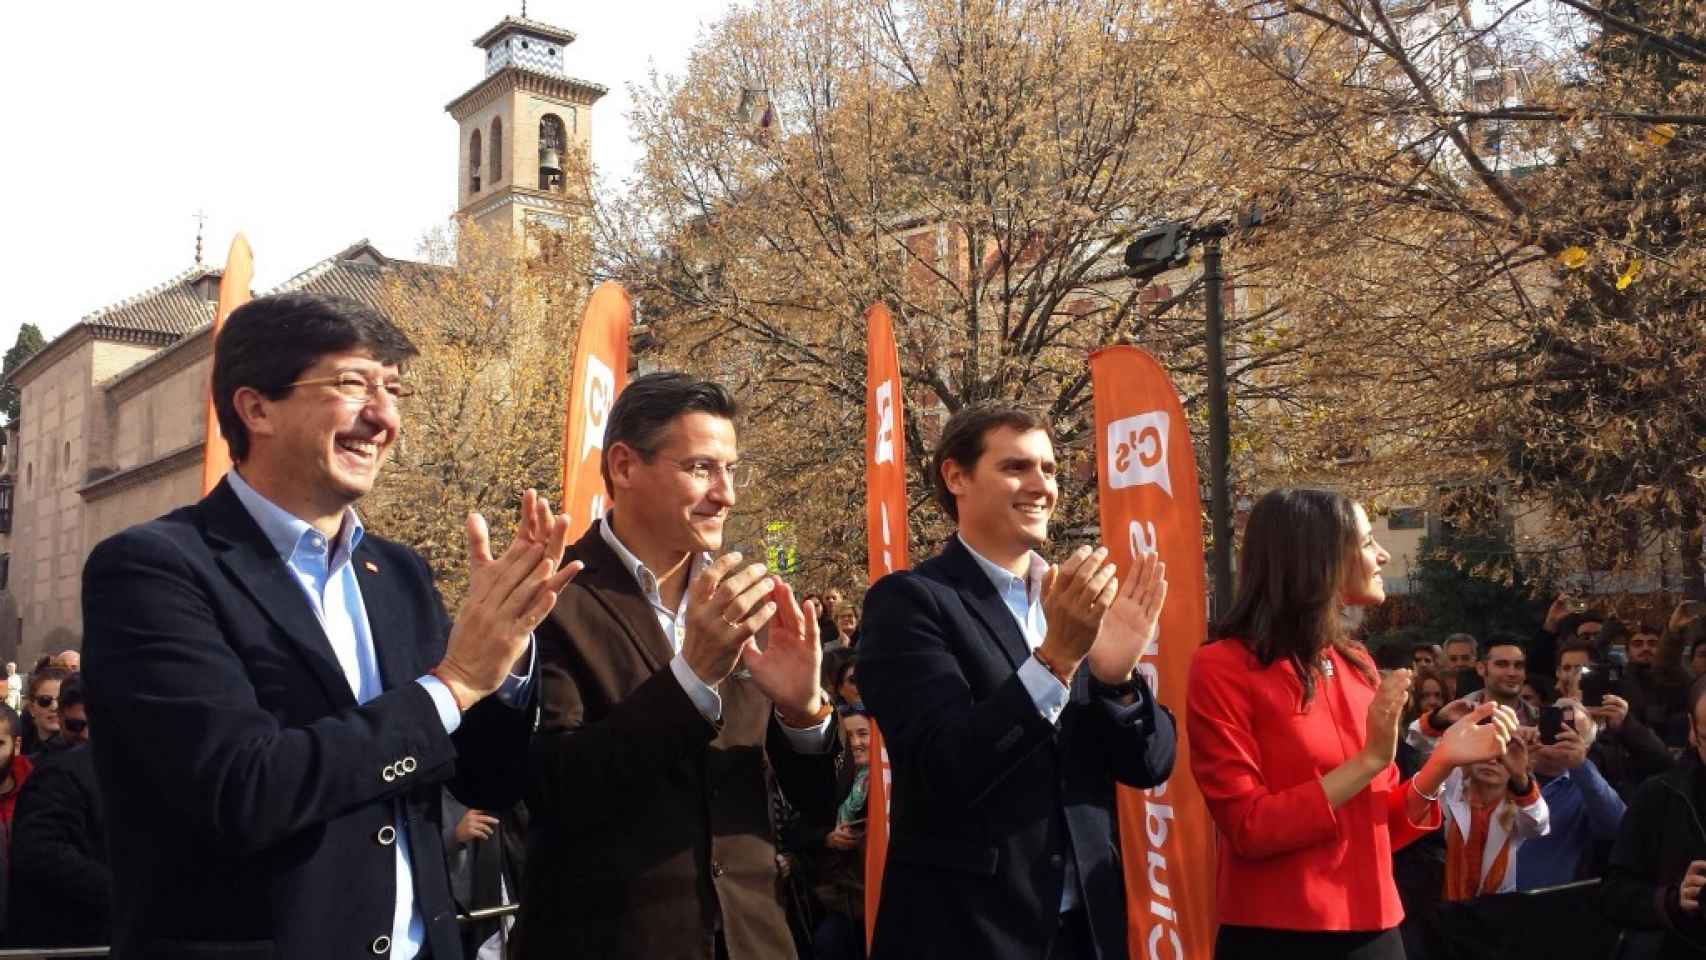 El alcalde de Granada junto a Juan Marín, Albert-Rivera e Inés Arrimadas en la campaña electoral de 2015.-Granada Cs